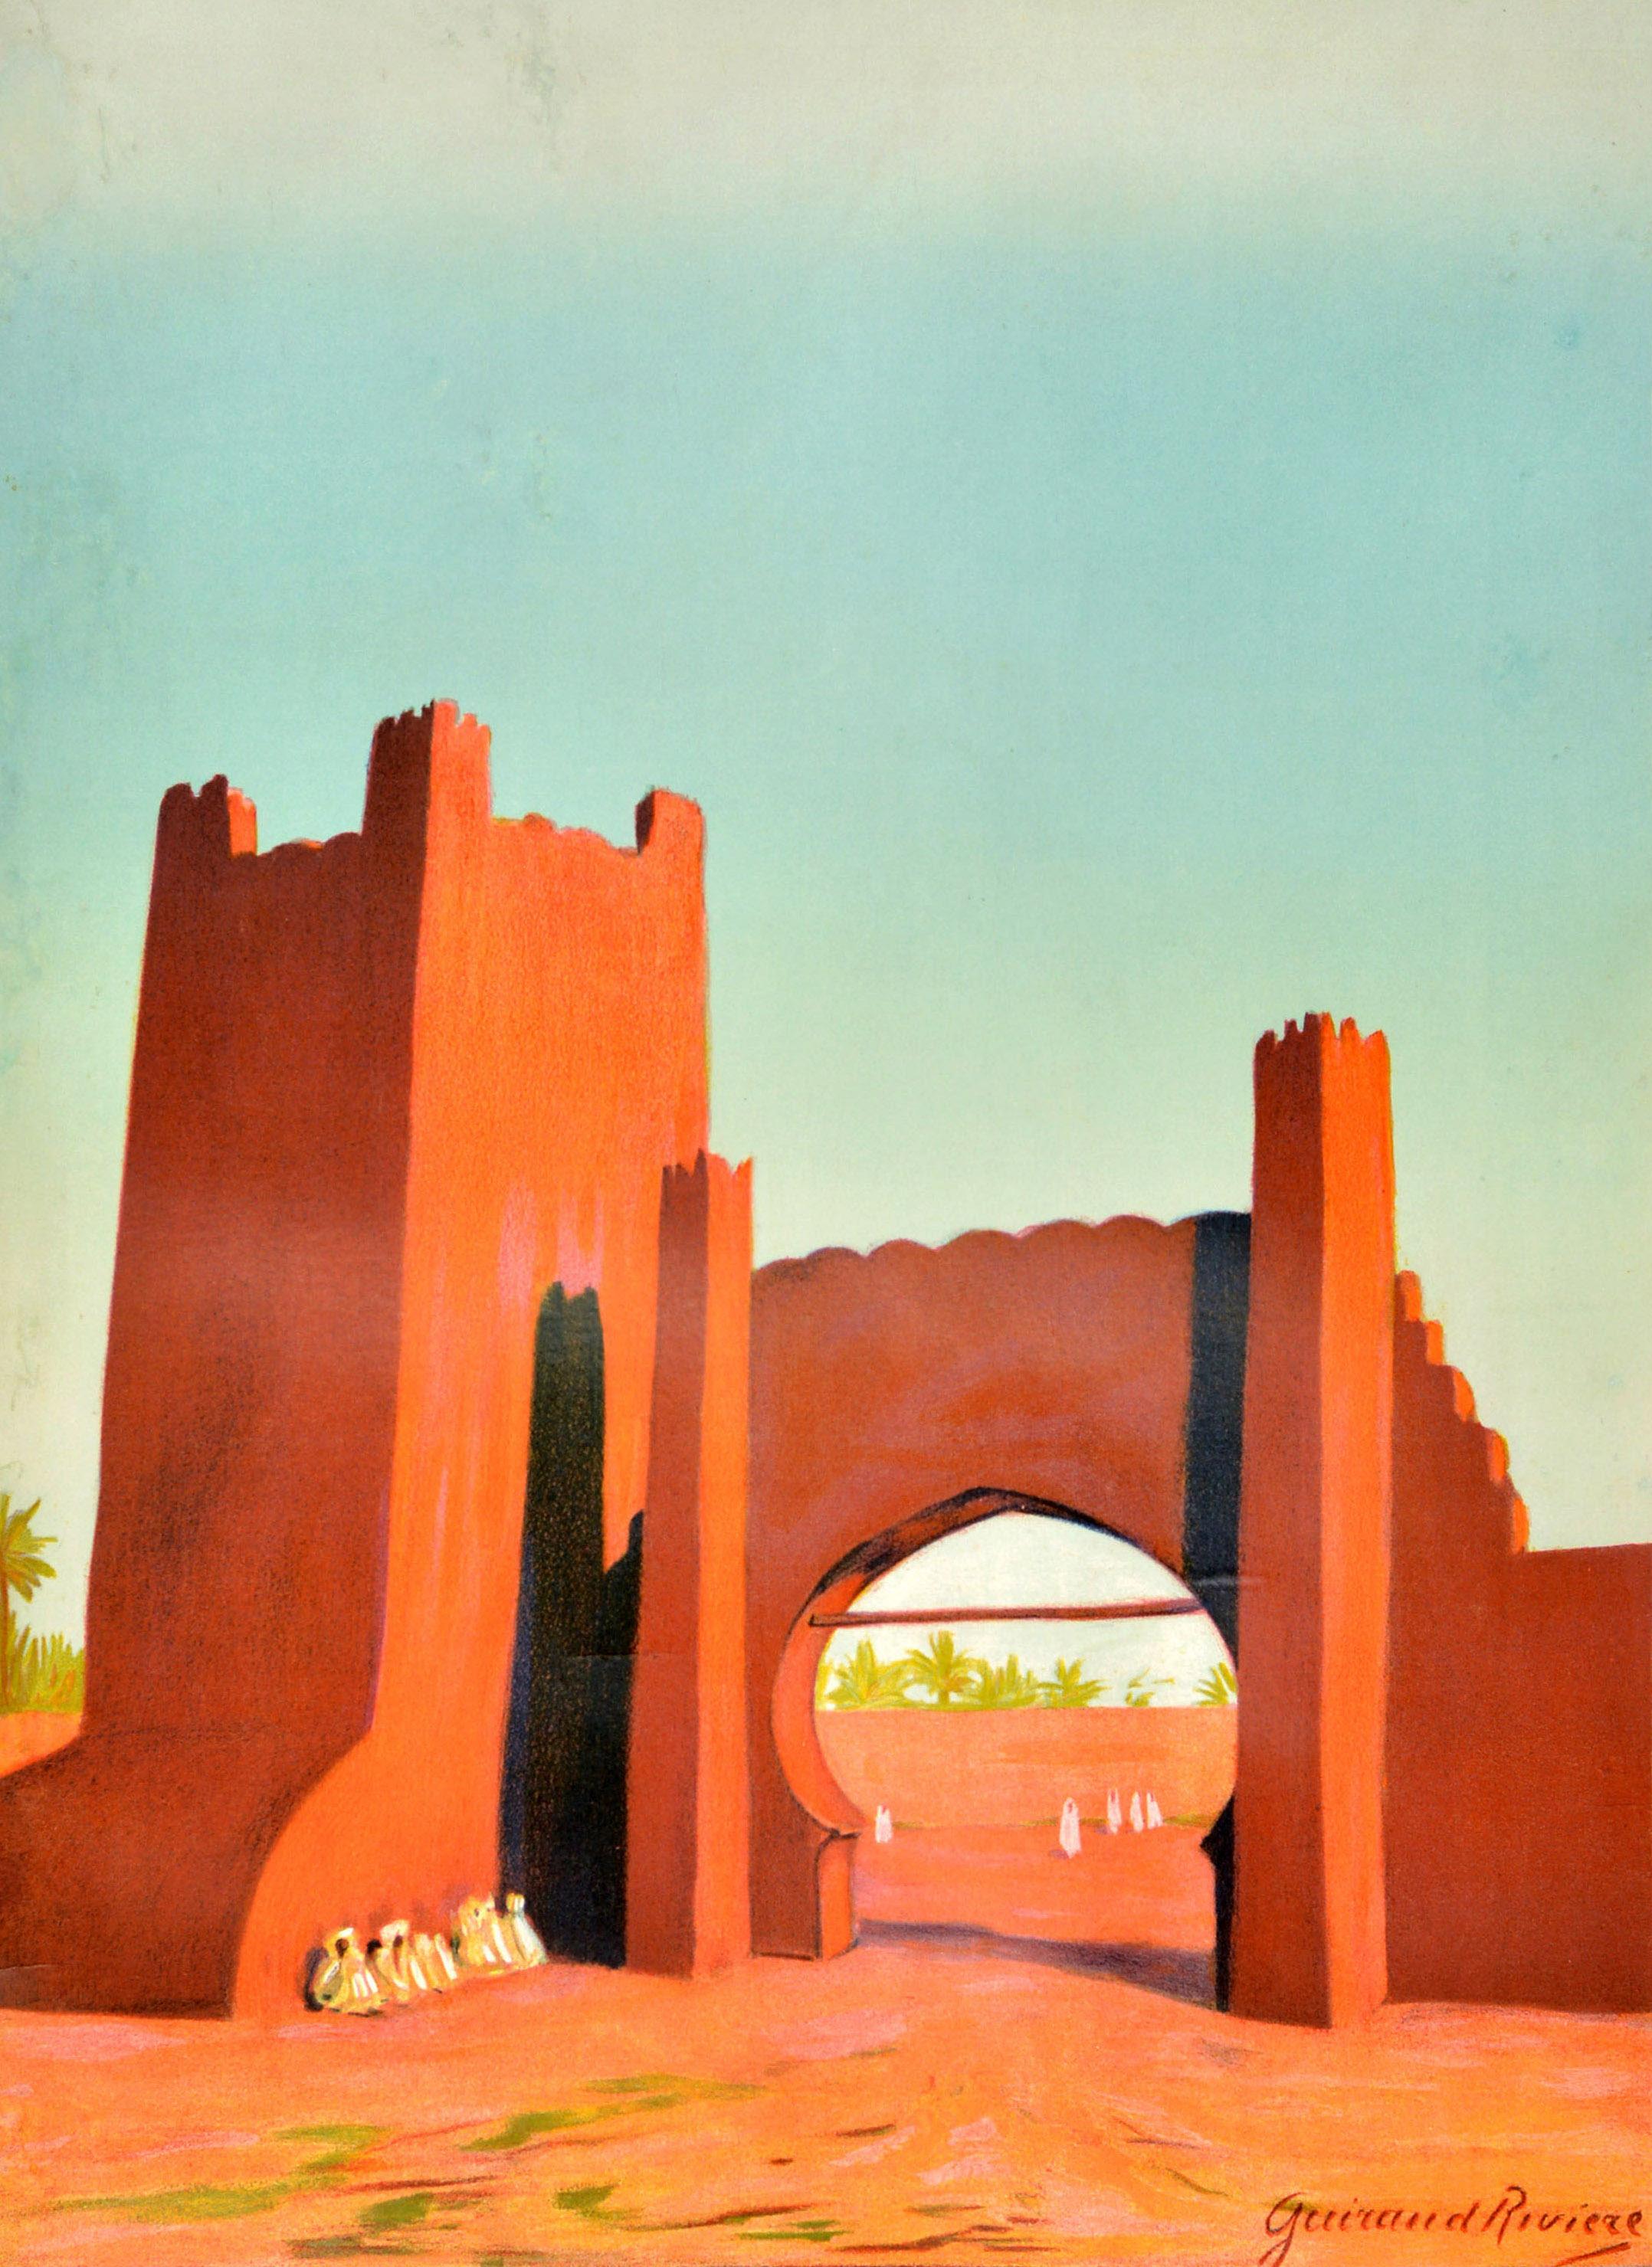 Original Vintage Travel Poster Morocco Chemins De Fer Du Maroc Guiraud Riviere - Print by Maurice Guiraud-Rivière